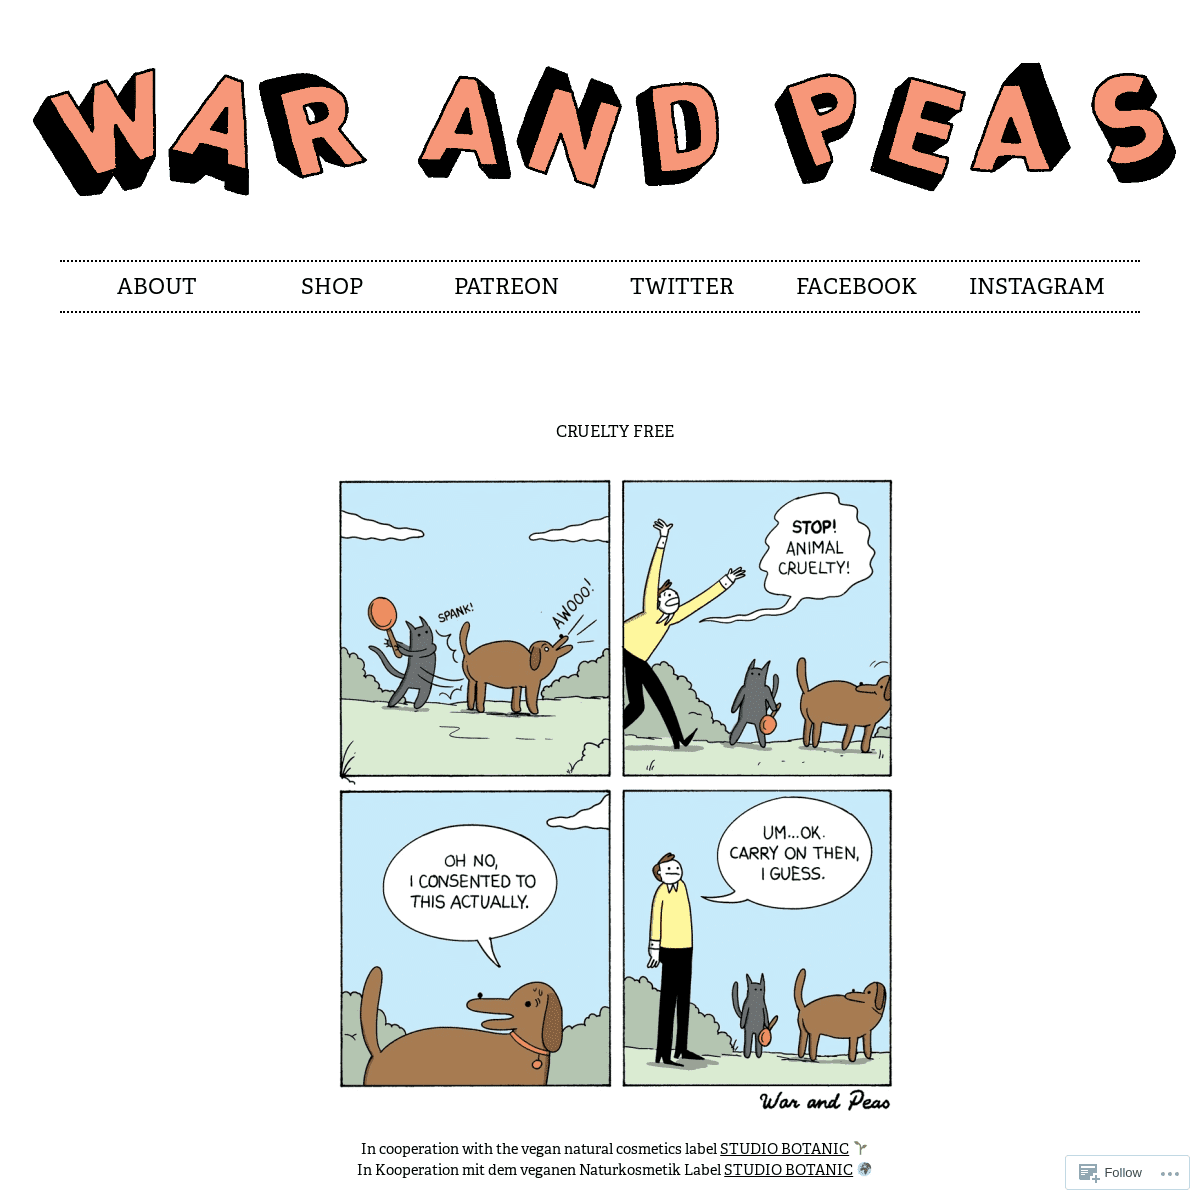 A complete backup of warandpeas.com